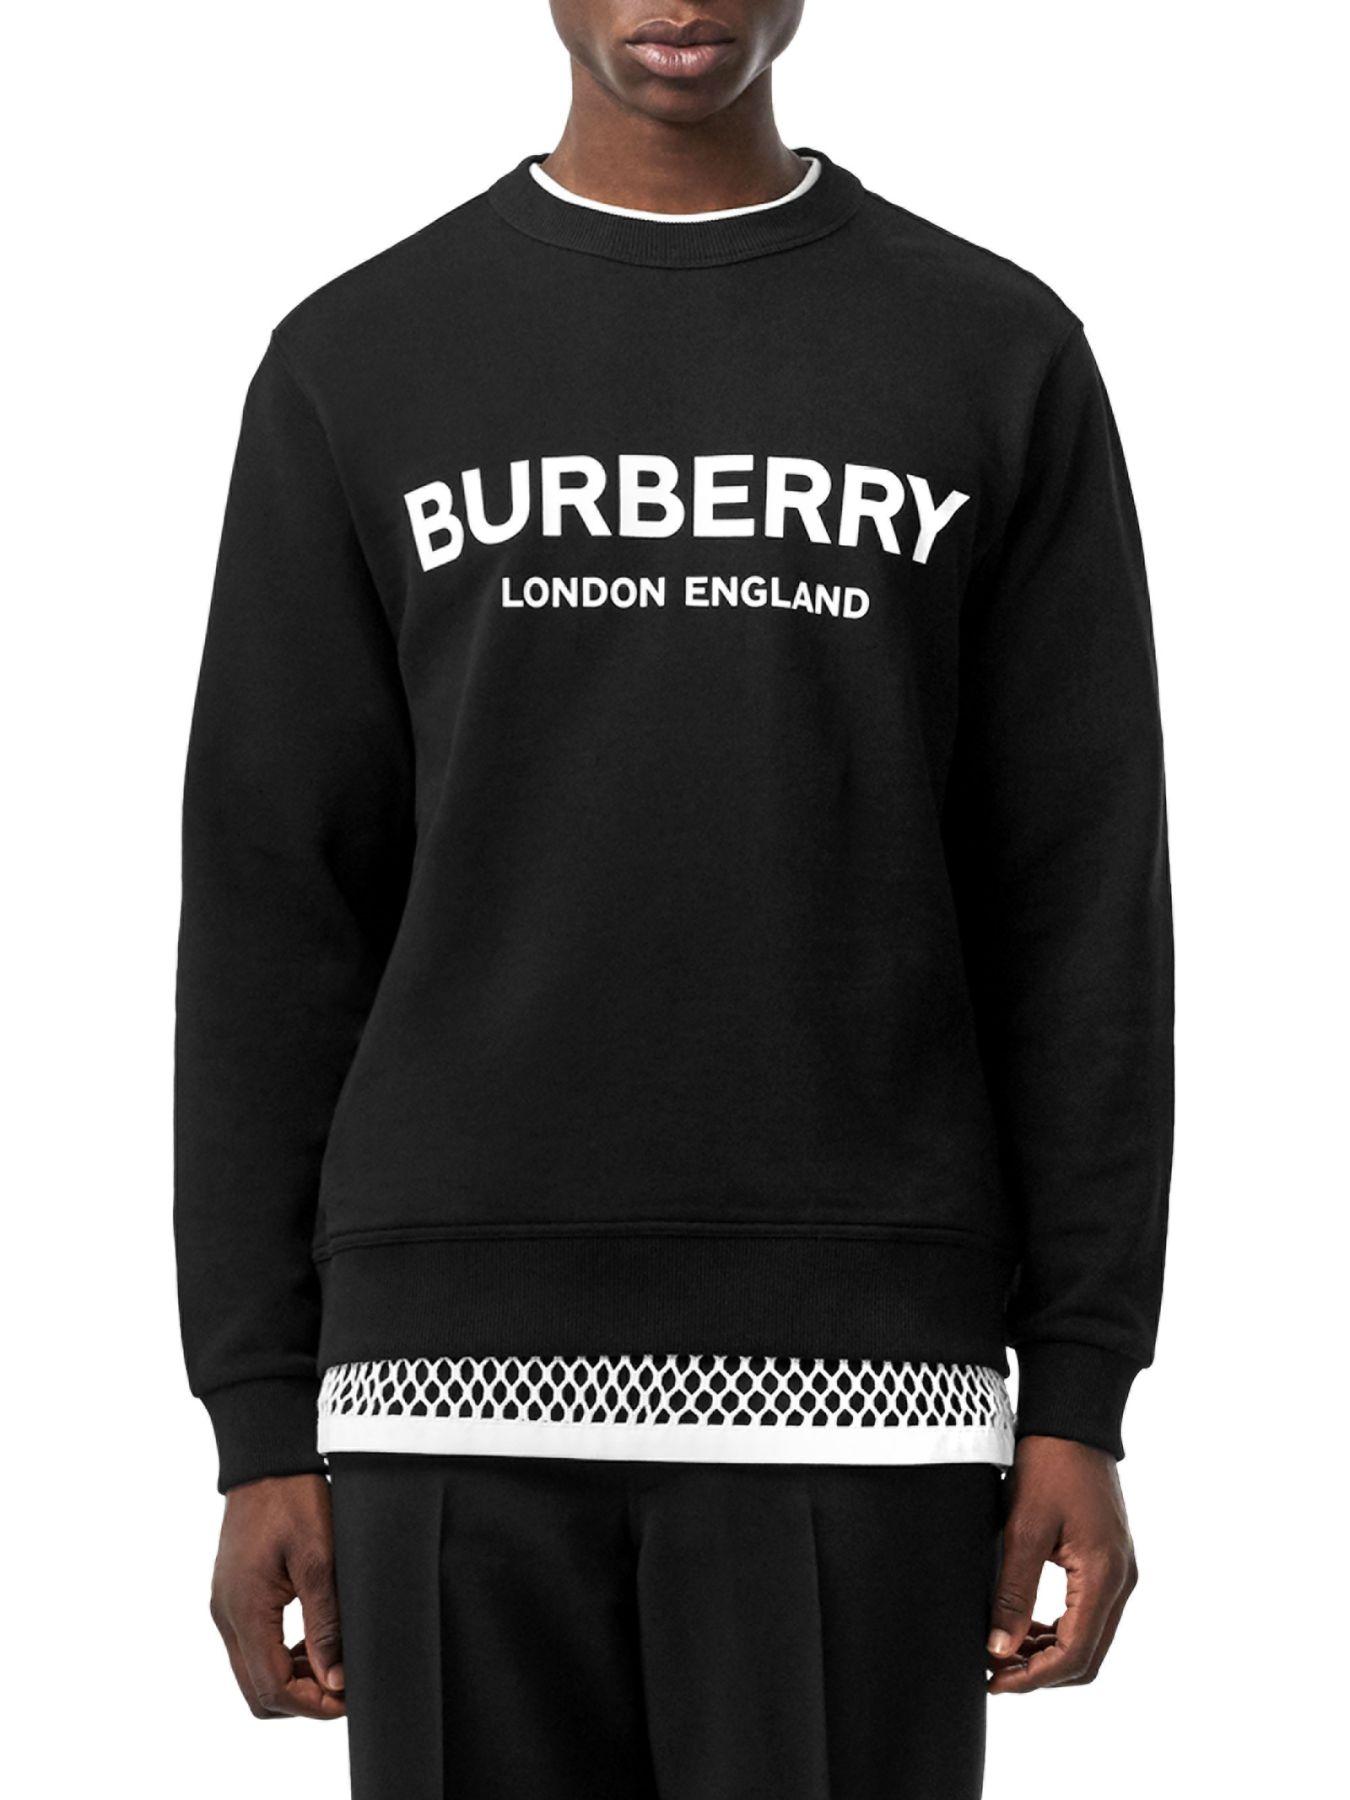 Burberry Cotton Logo Sweatshirt in Black for Men - Save 45% | Lyst